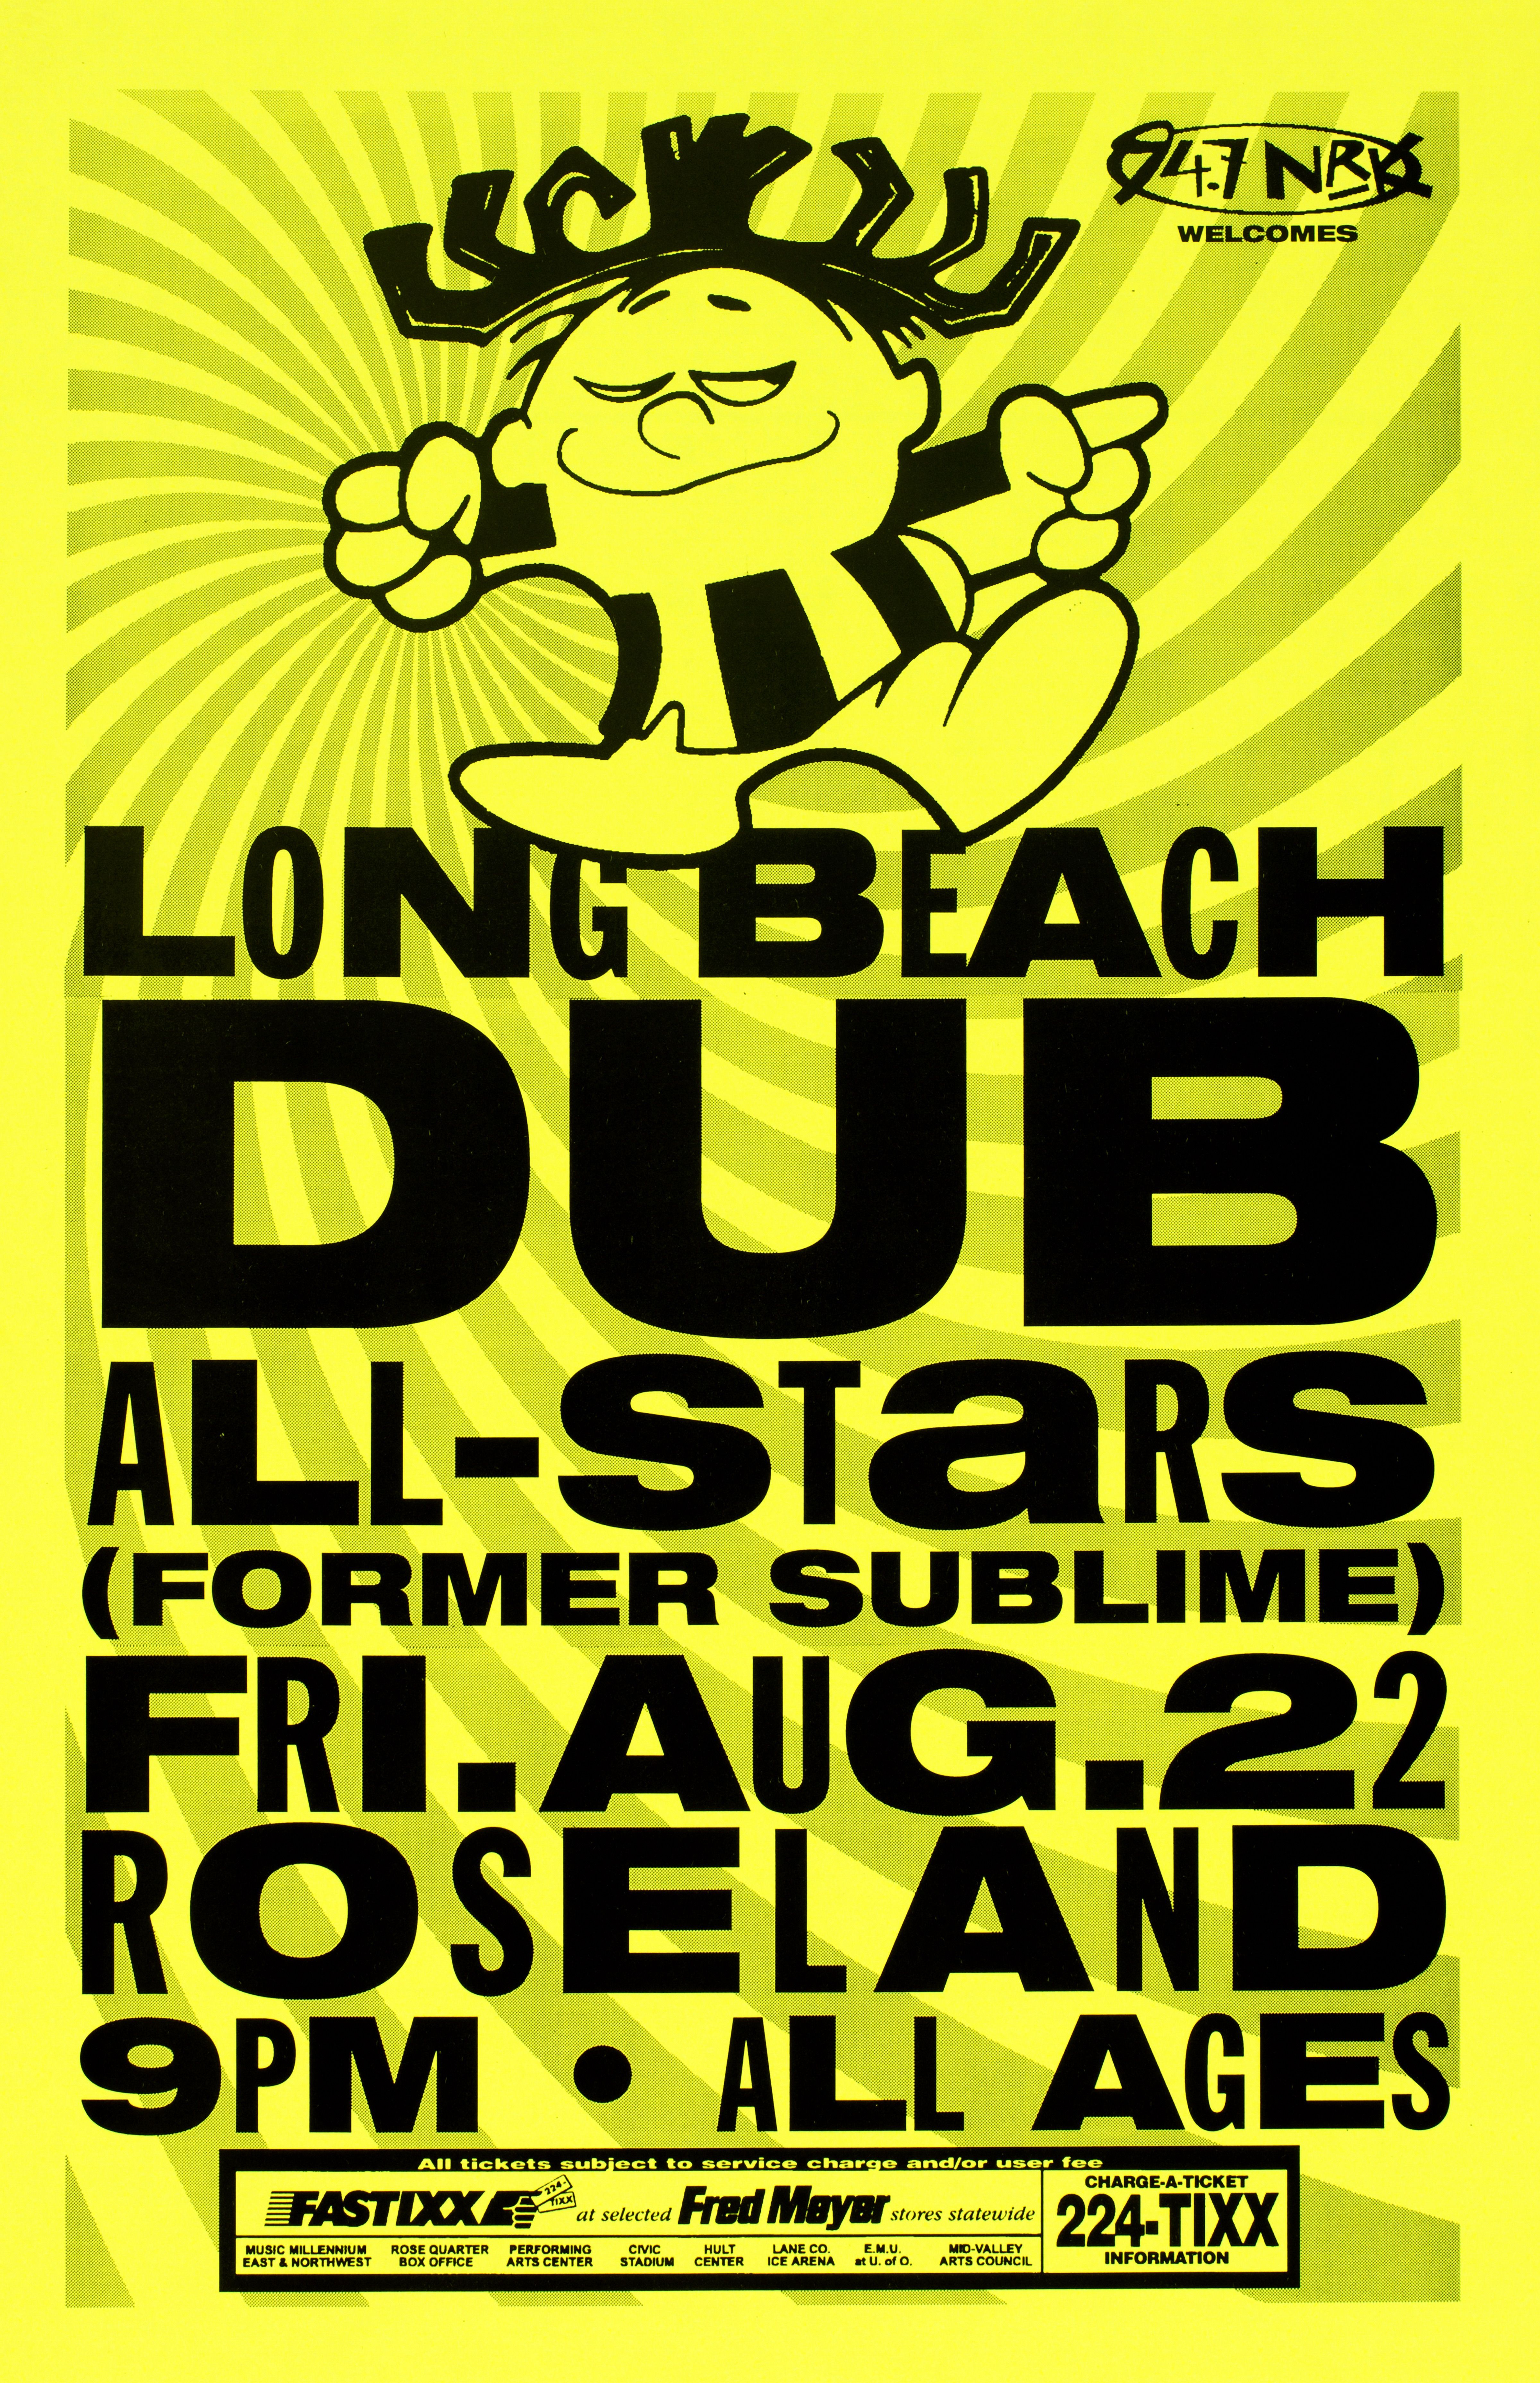 MXP-76.1 Long Beach Dub All-Stars Roseland Theater 1997 Concert Poster